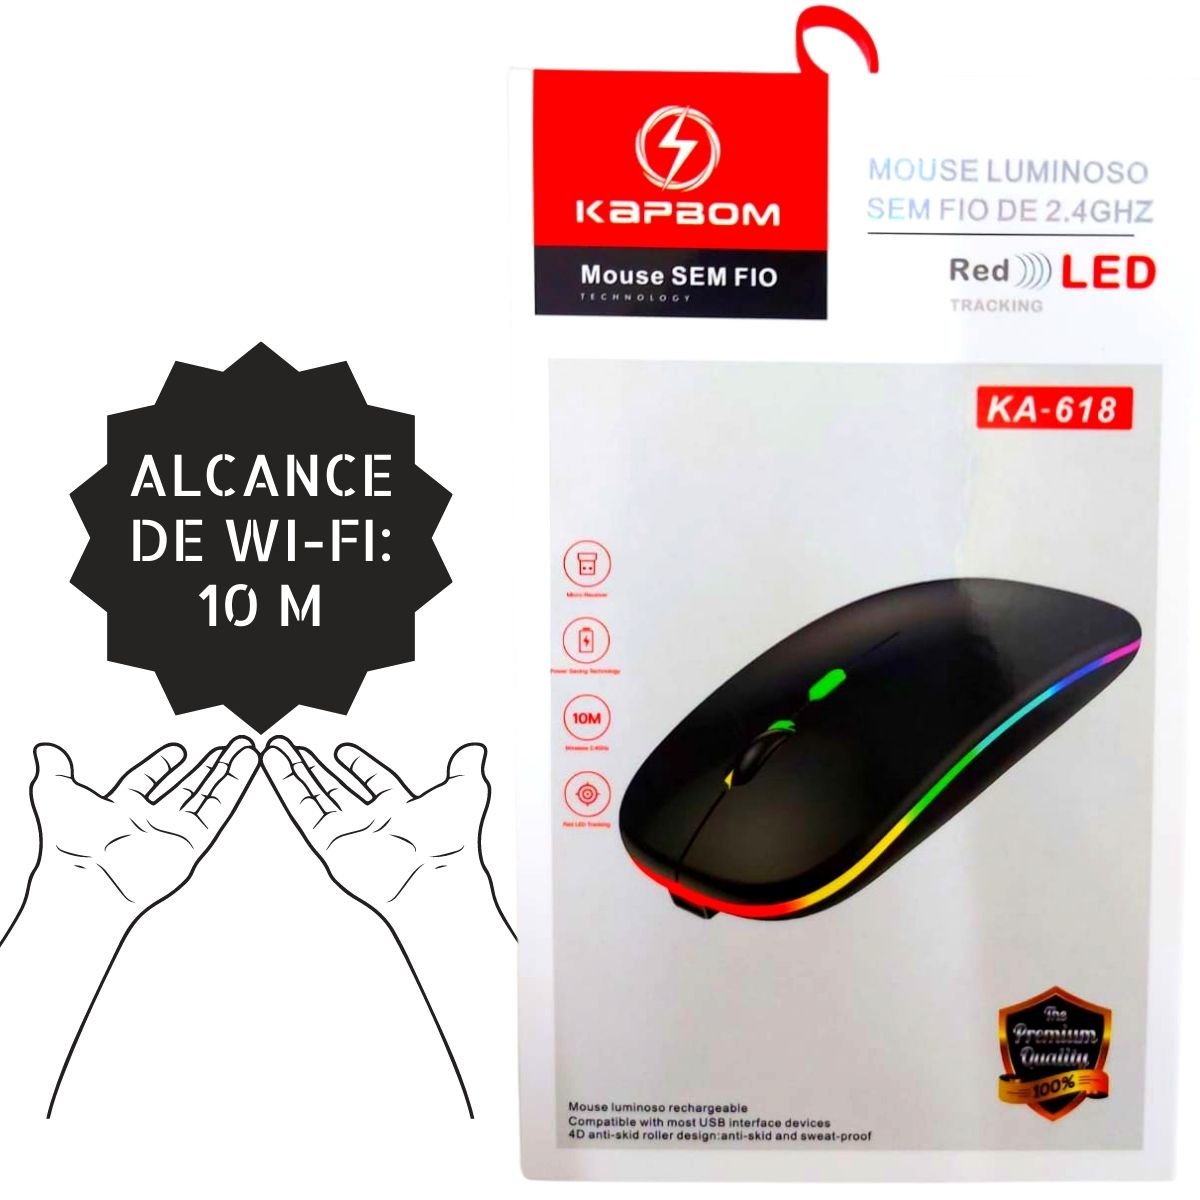 Mouse Silencioso Sem Fio Recarregável Luminoso Led RGB Kapbom KA-618 Silencioso Sem Fio Recarregavel - 4